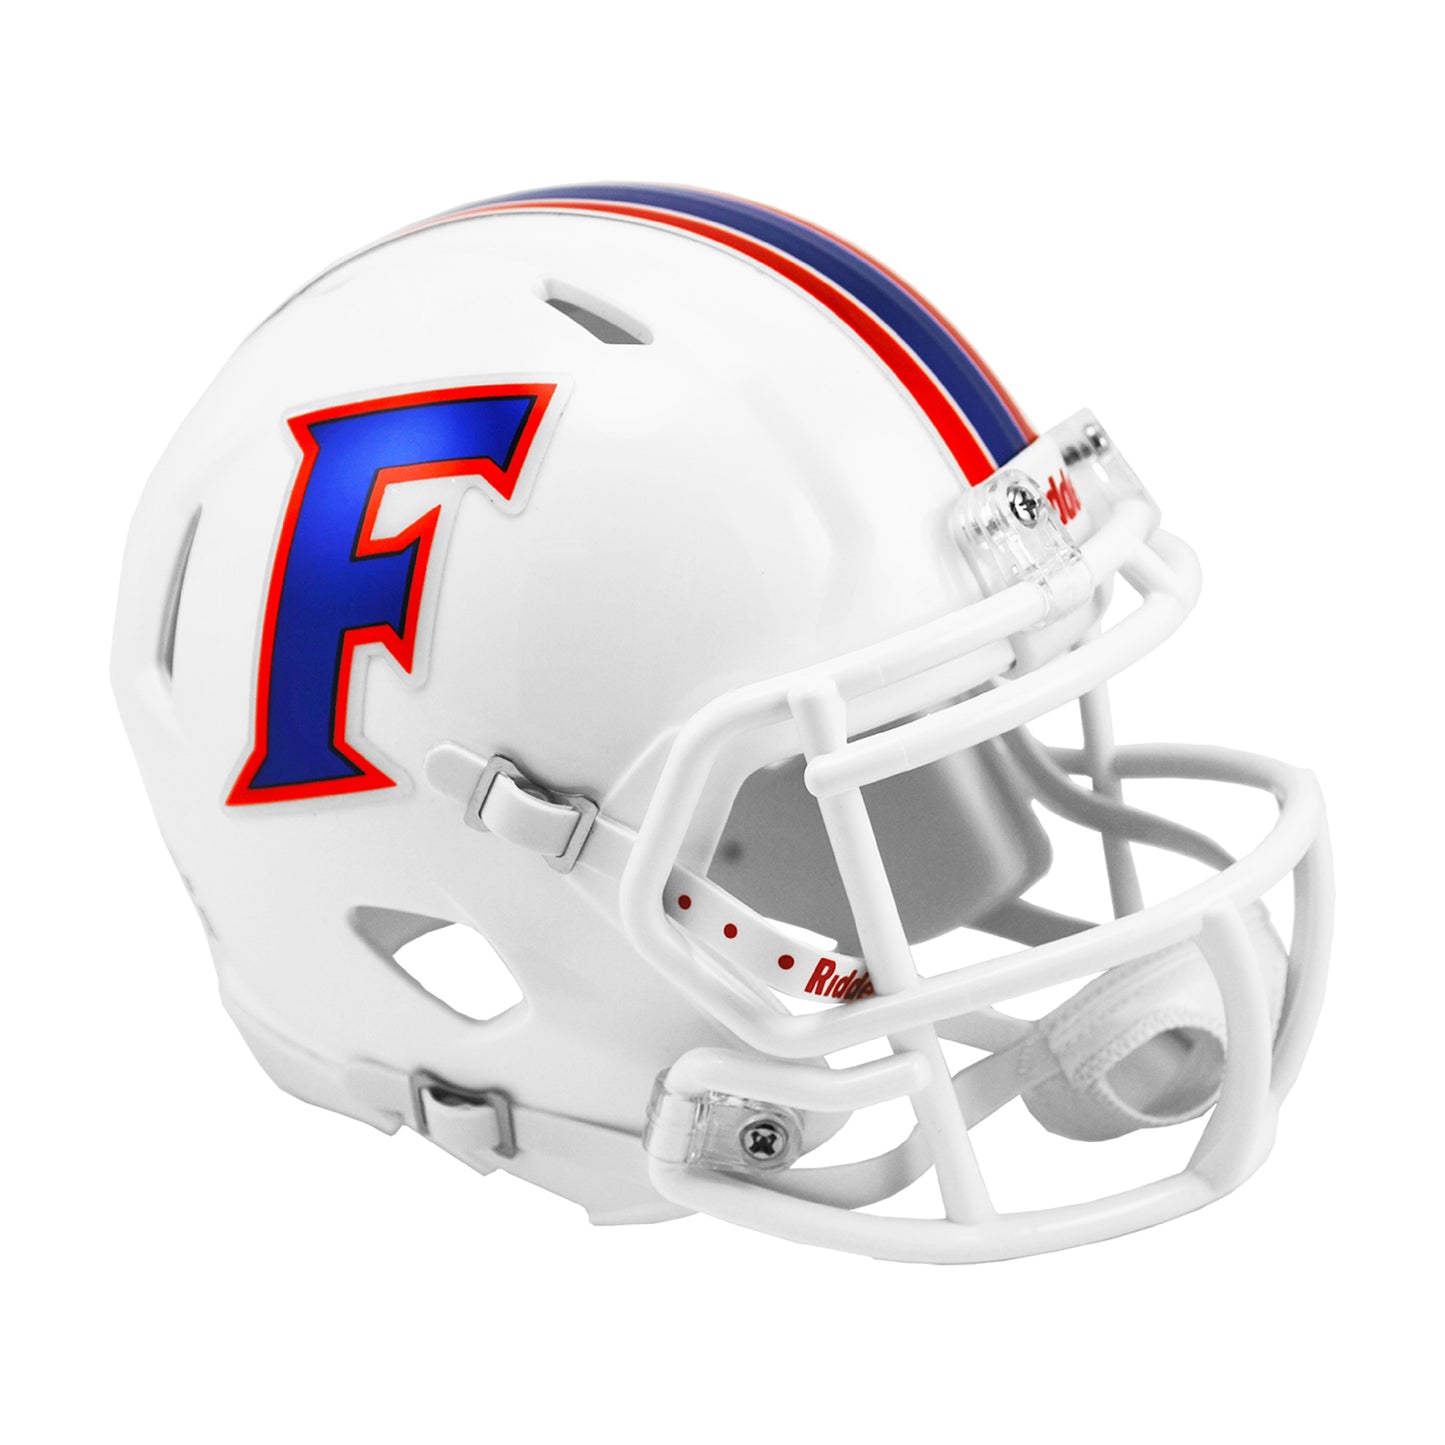 Florida Gators Riddell Speed Mini White Alternate Football Helmet